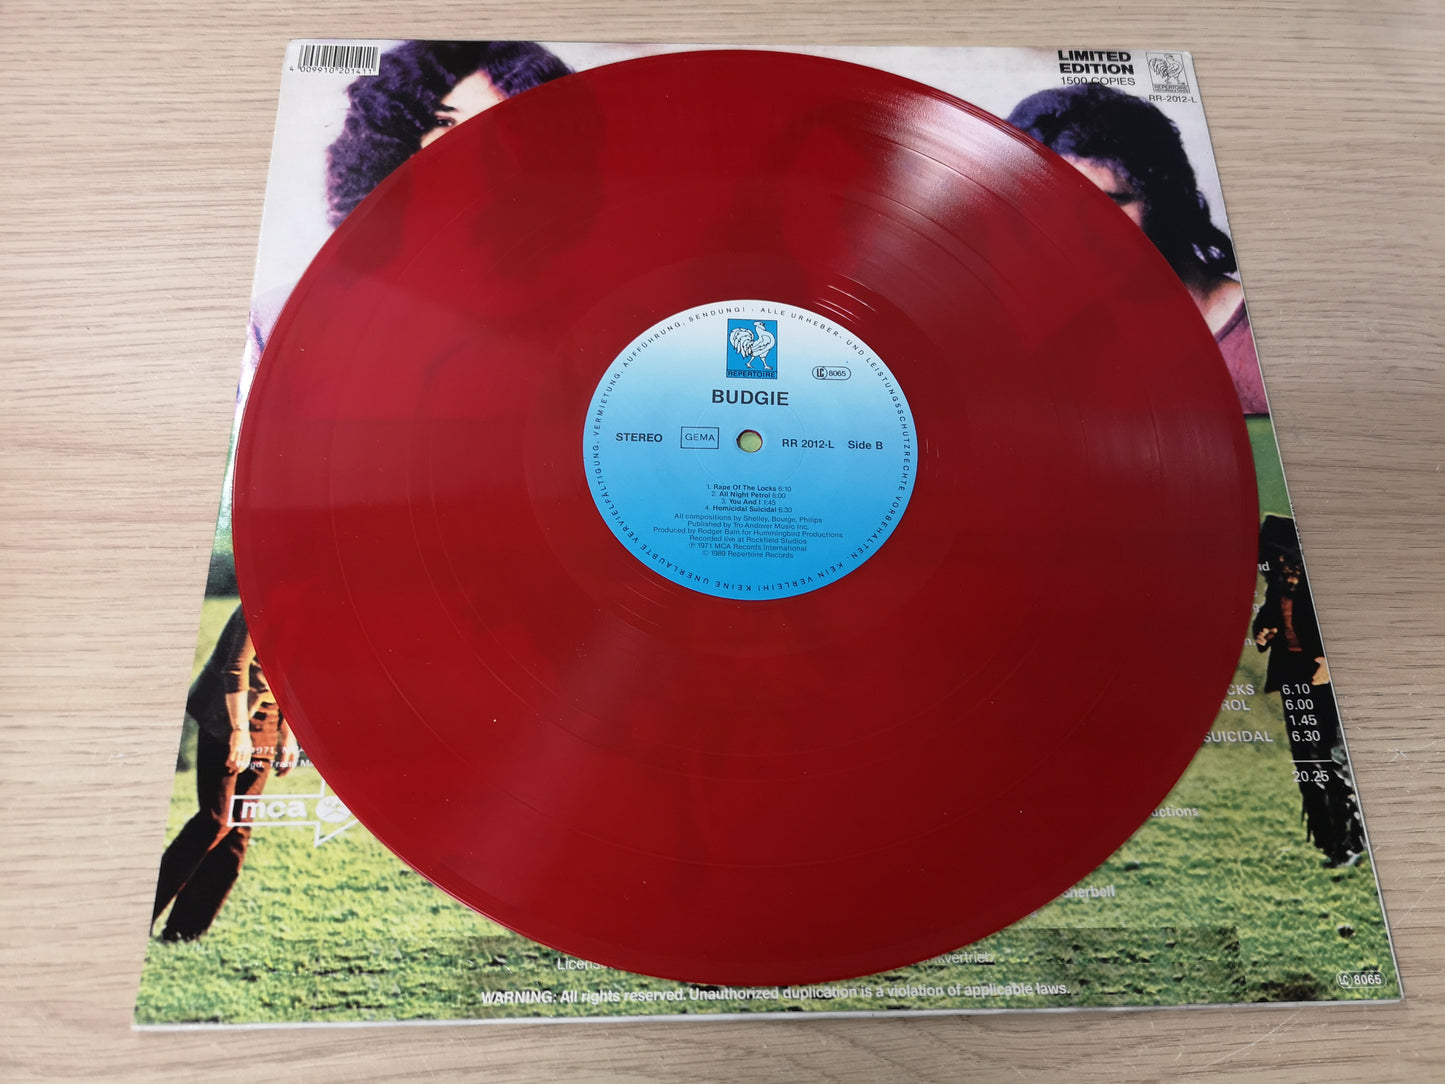 Budgie "S/T" Re Germany 1989 Repertoire Red Vinyl M-/M- (Ltd 1500 Copies)